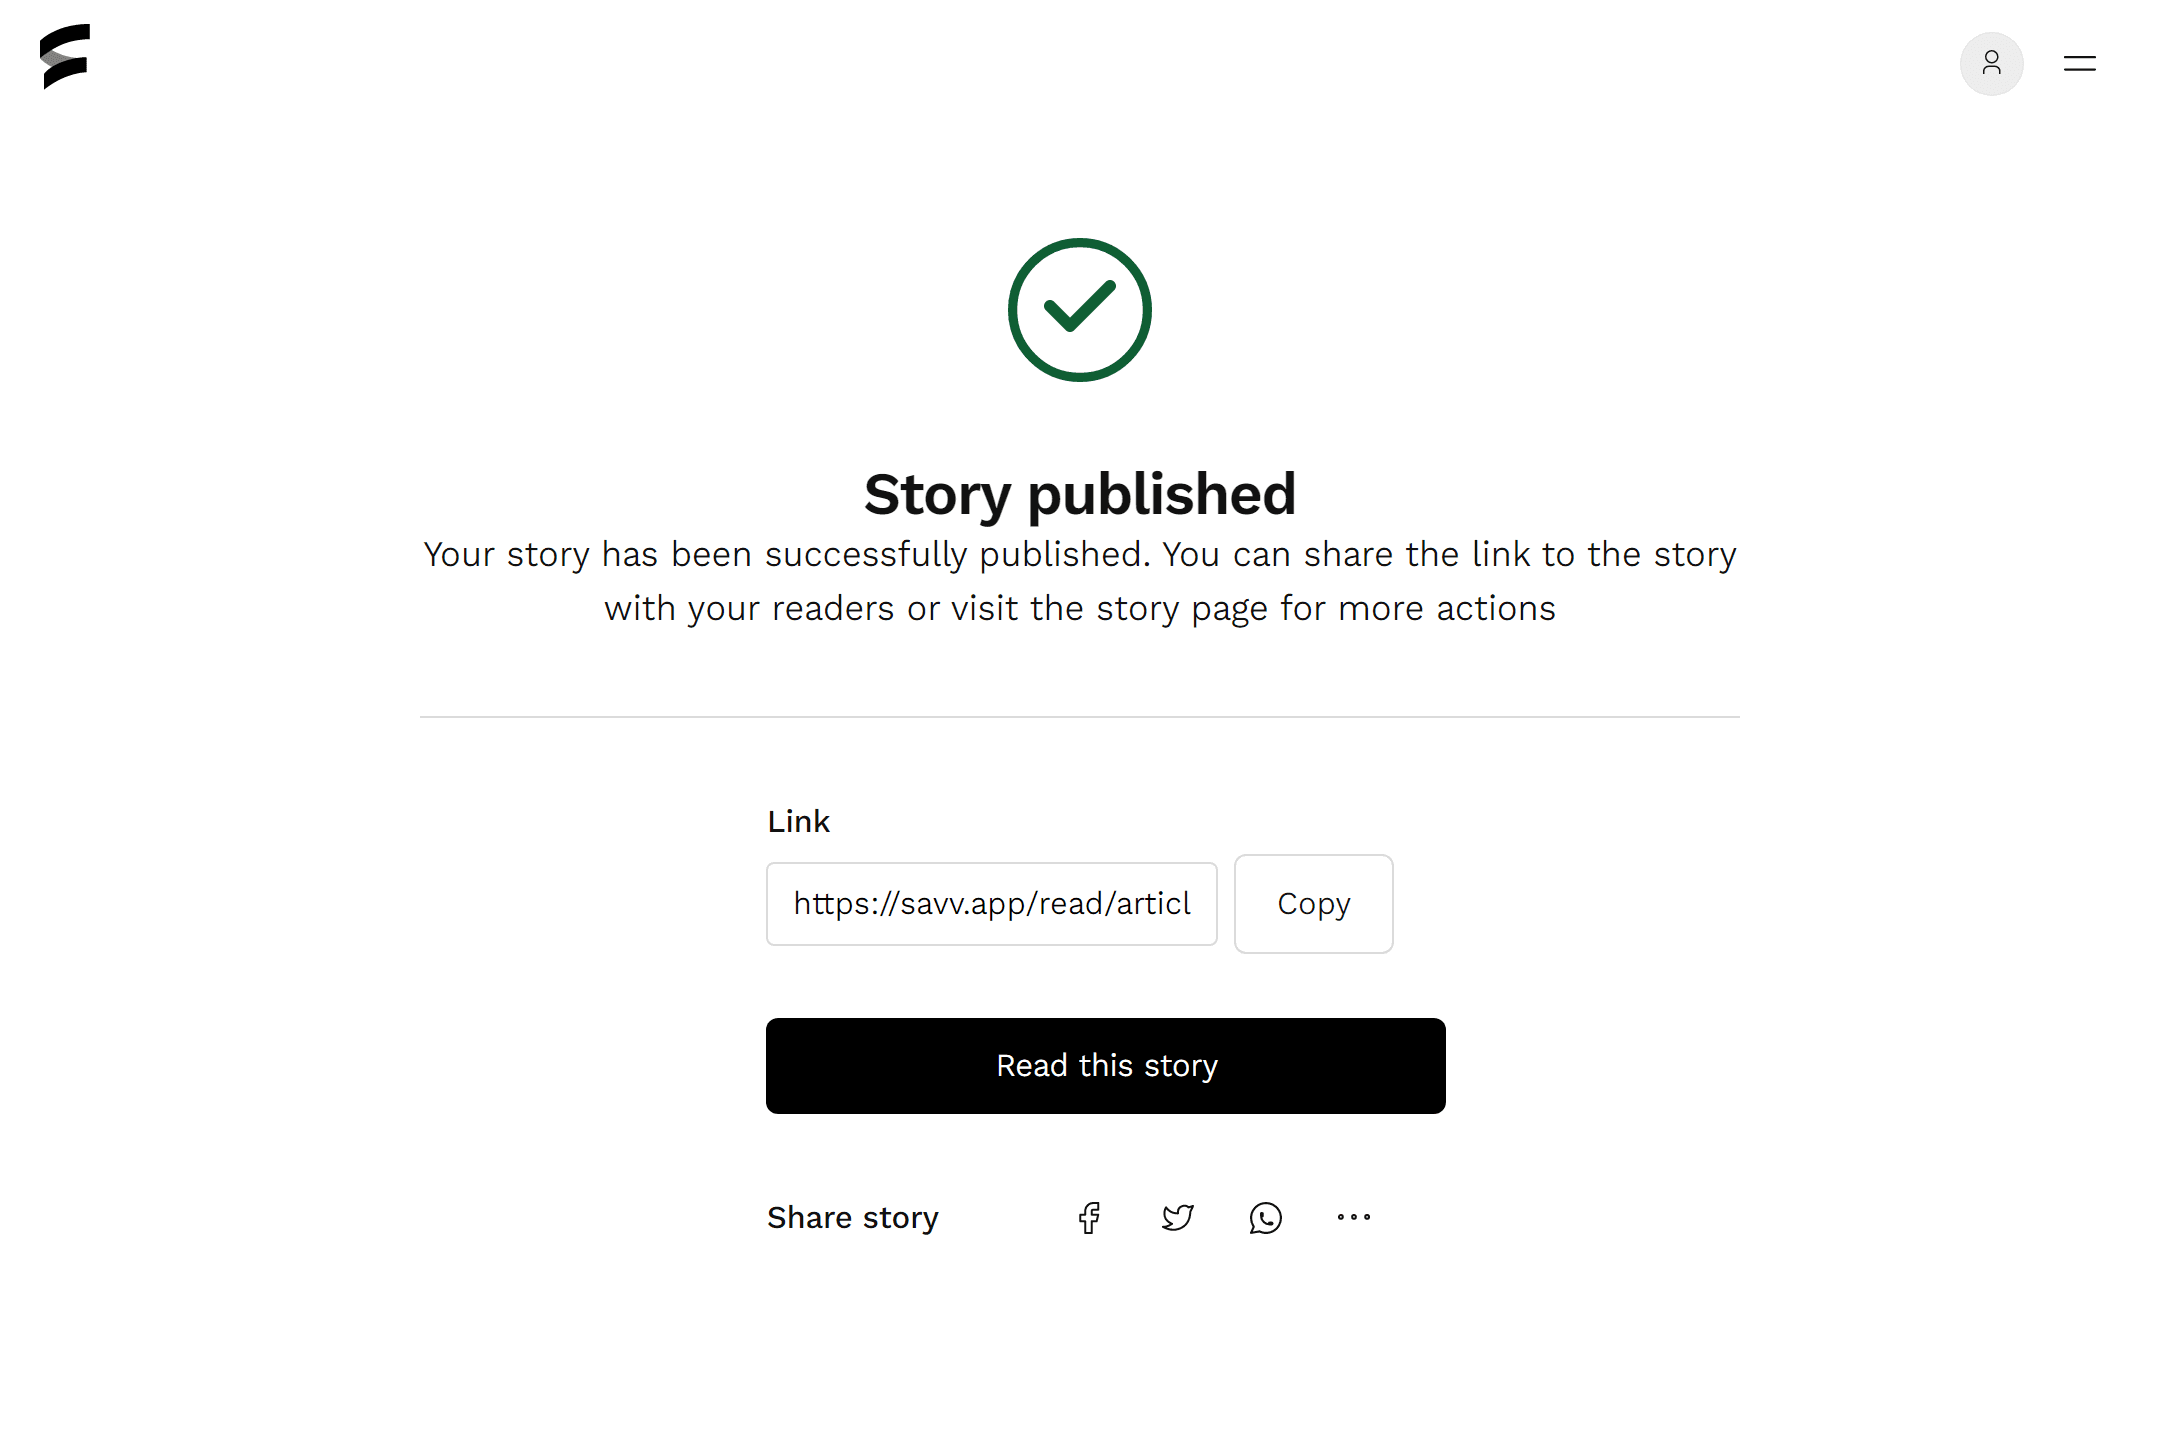 A screenshot the screen when you successfully publish an article